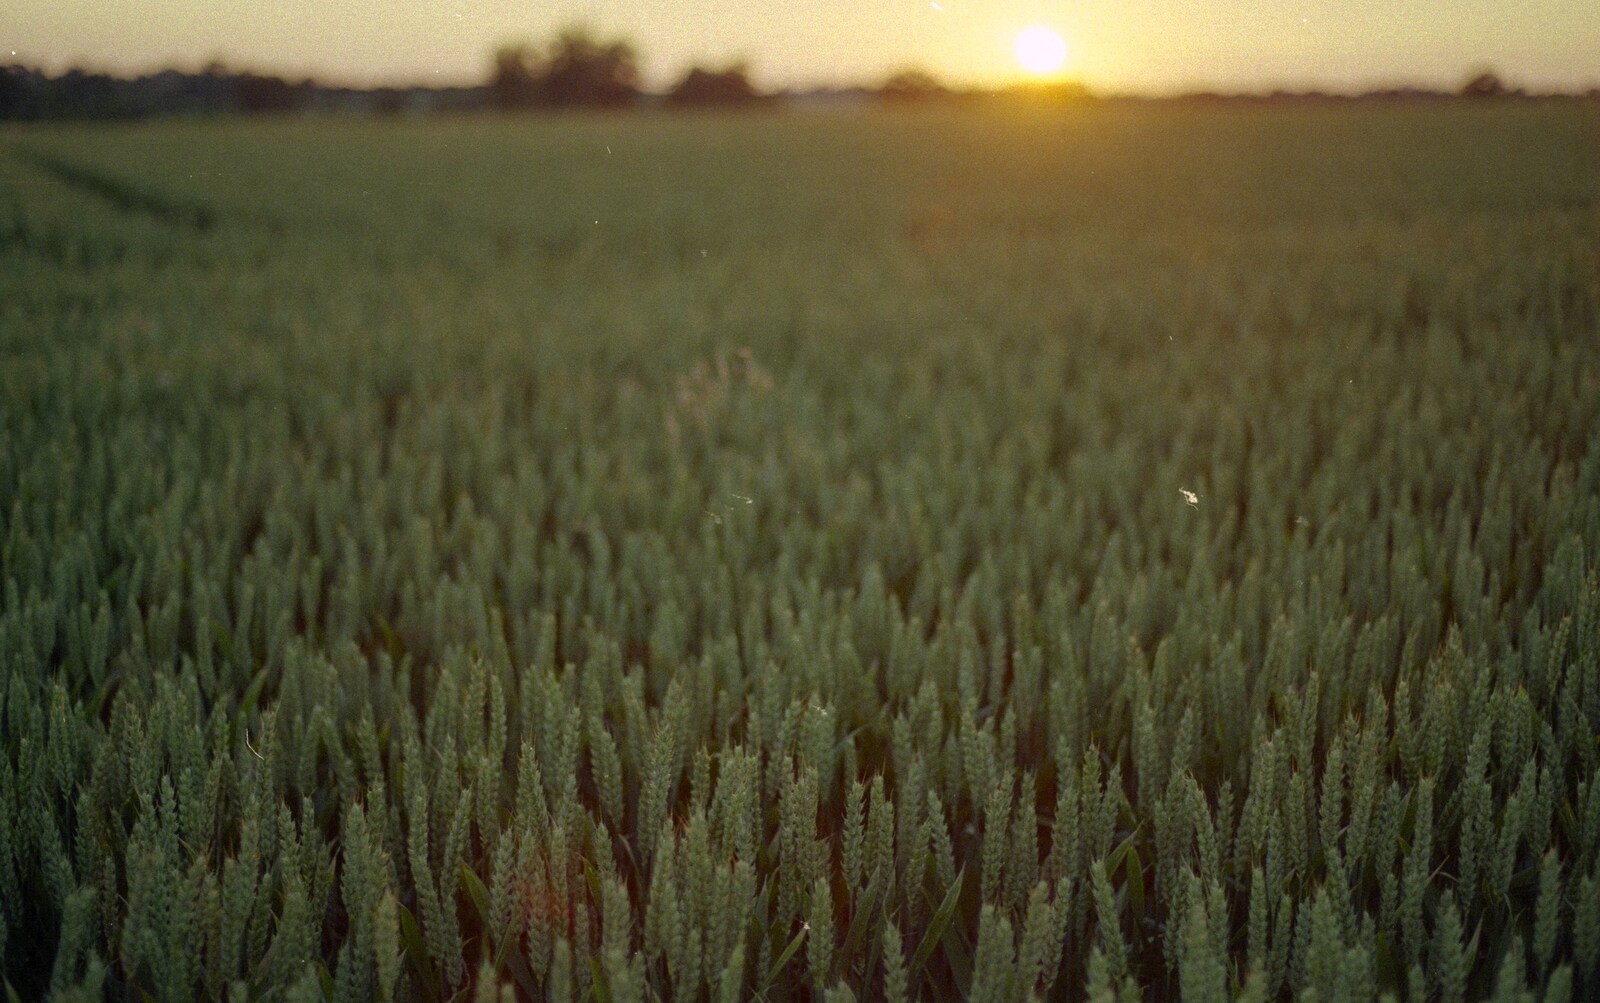 A field of unripe wheat from A Walk to Thrandeston, Suffolk - 29th June 1991